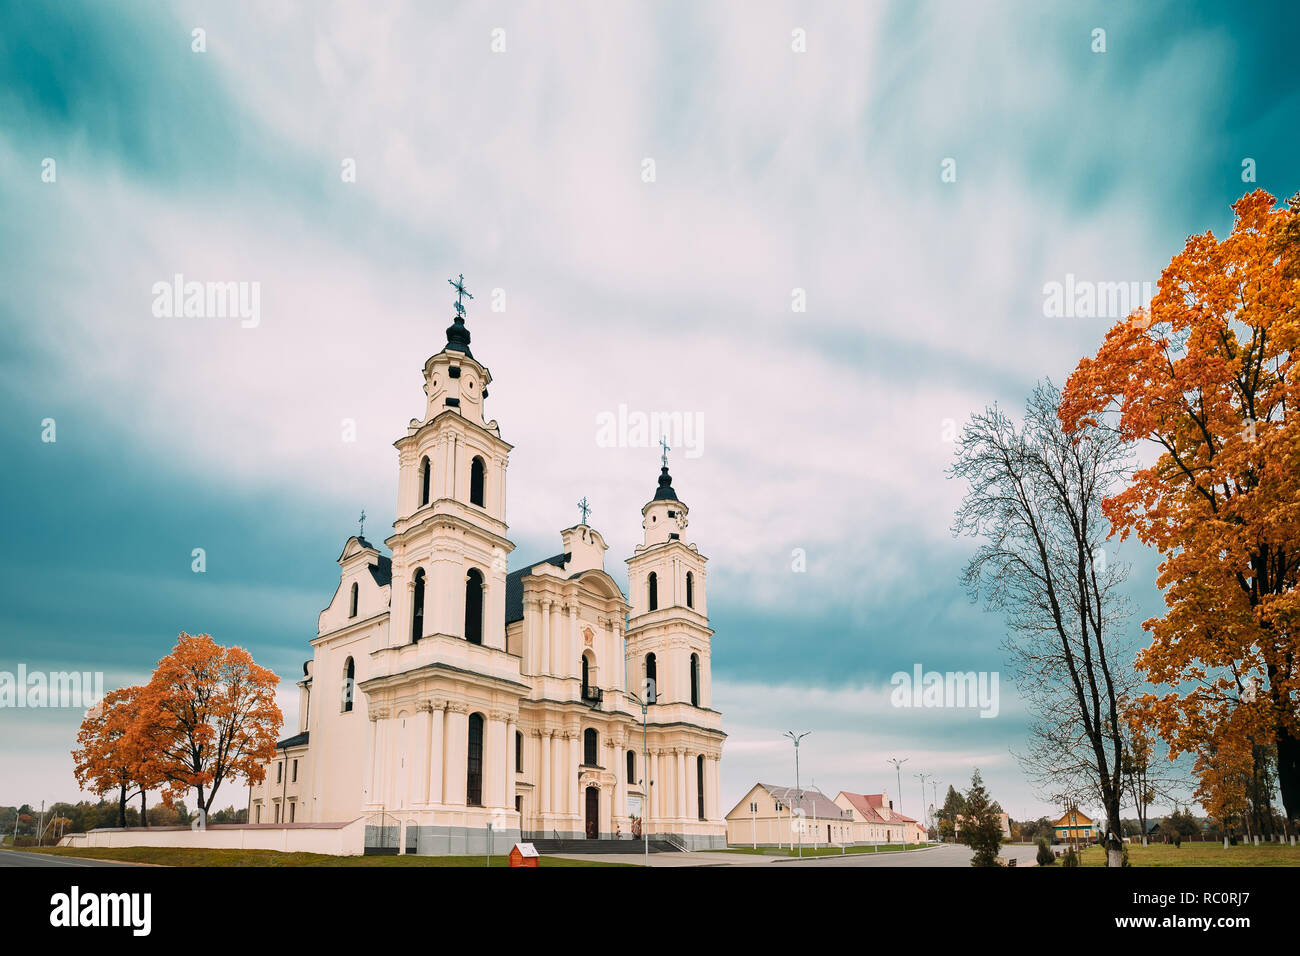 Budslau, Myadzyel Raion, Minsk Region, Belarus. Church Of Assumption Of Blessed Virgin Mary In Autumn Day. Stock Photo